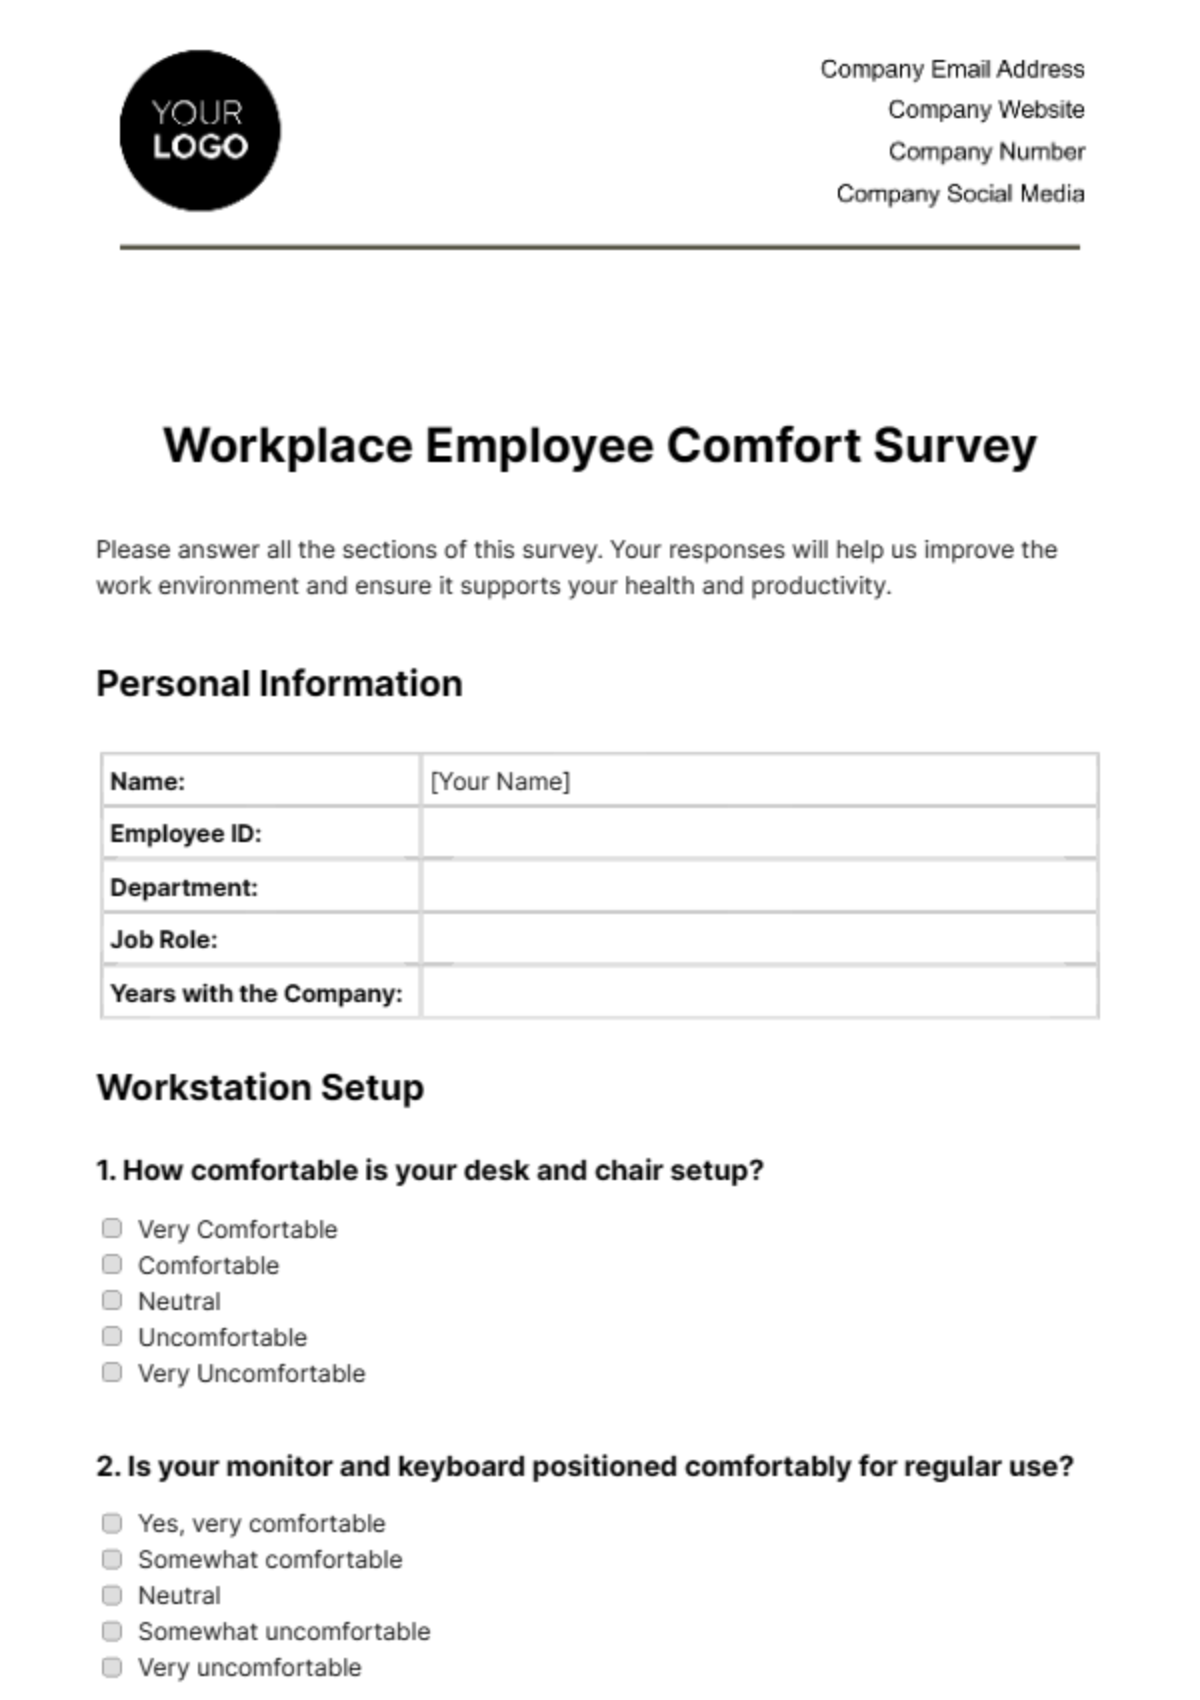 Workplace Employee Comfort Survey Template